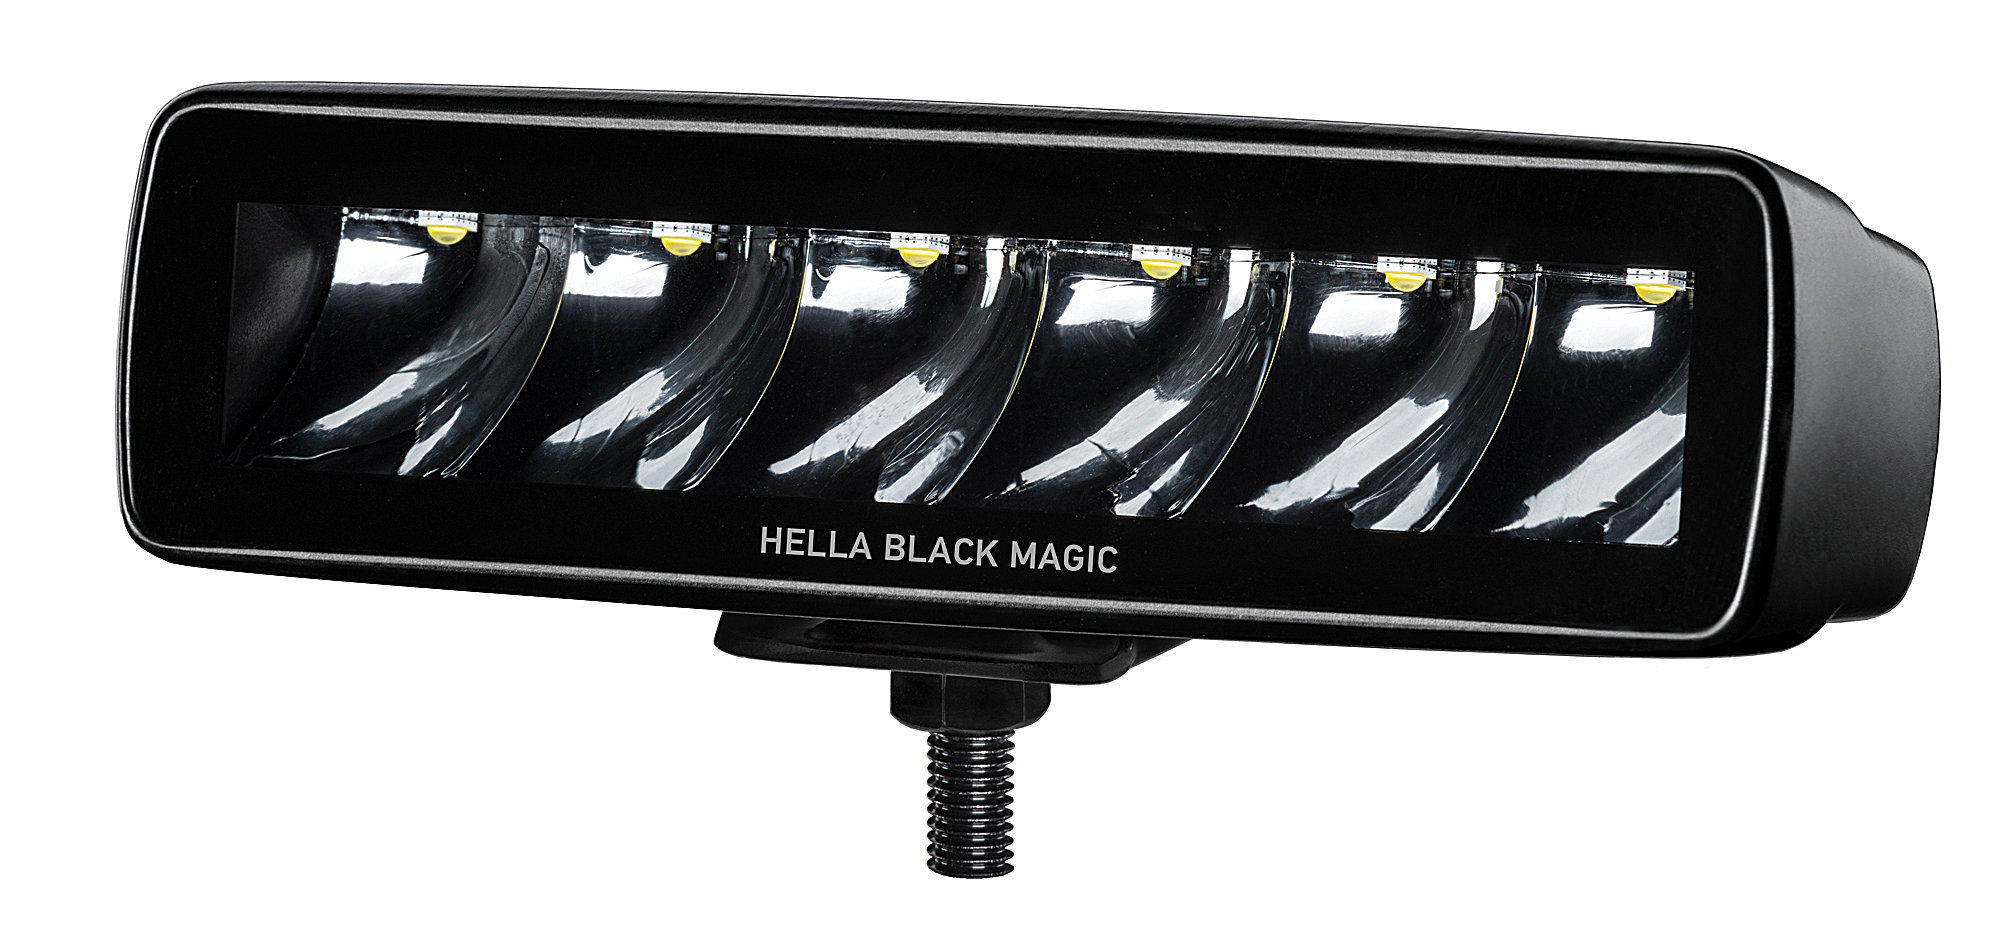 Hella Black Magic 6-LED Mini Light Bar | Quadratec